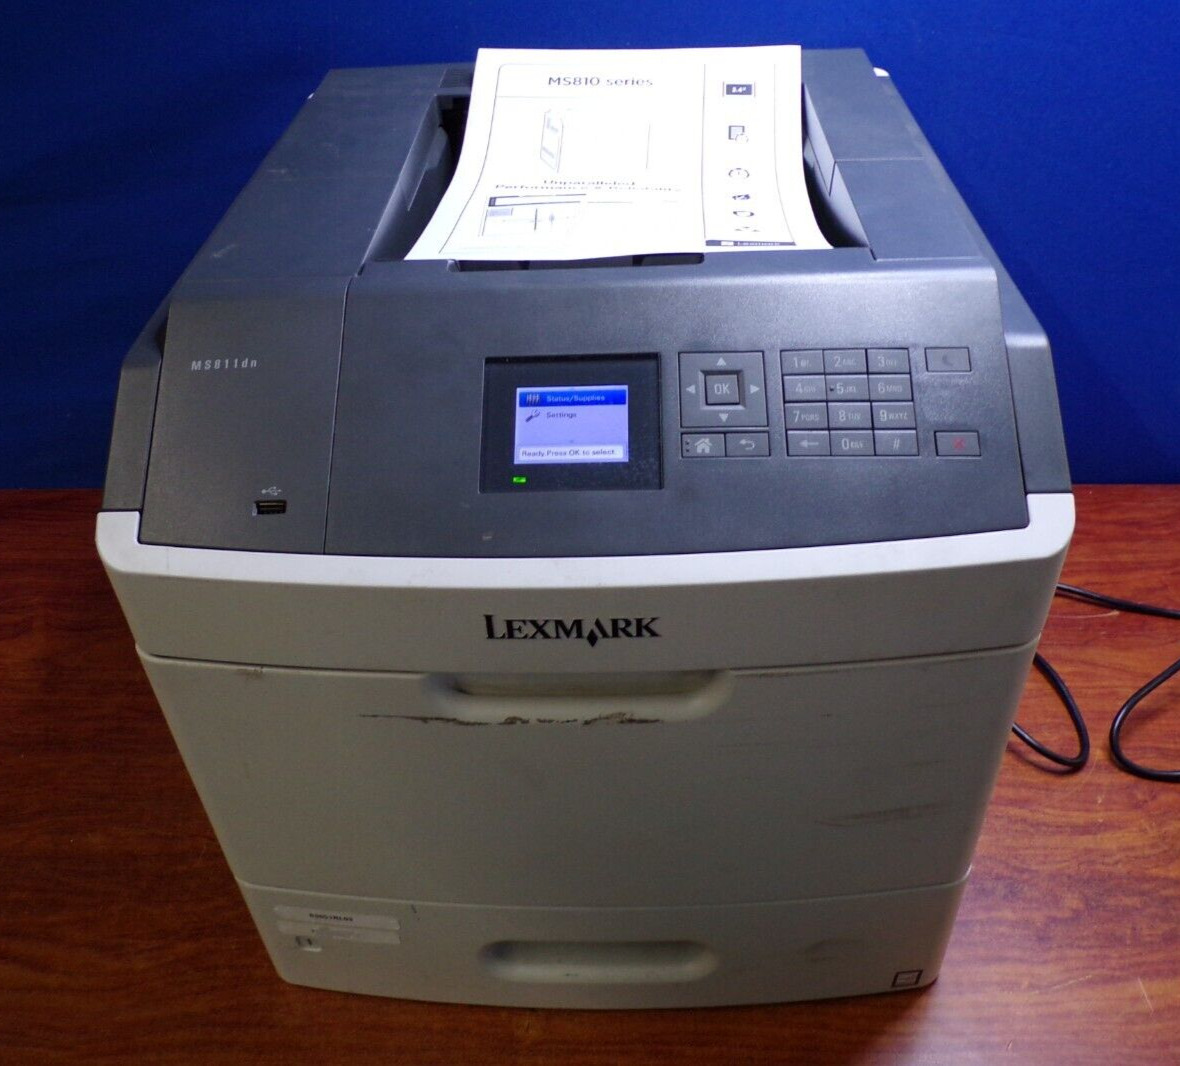 Lexmark MS811dn Monochrome Laser Printer